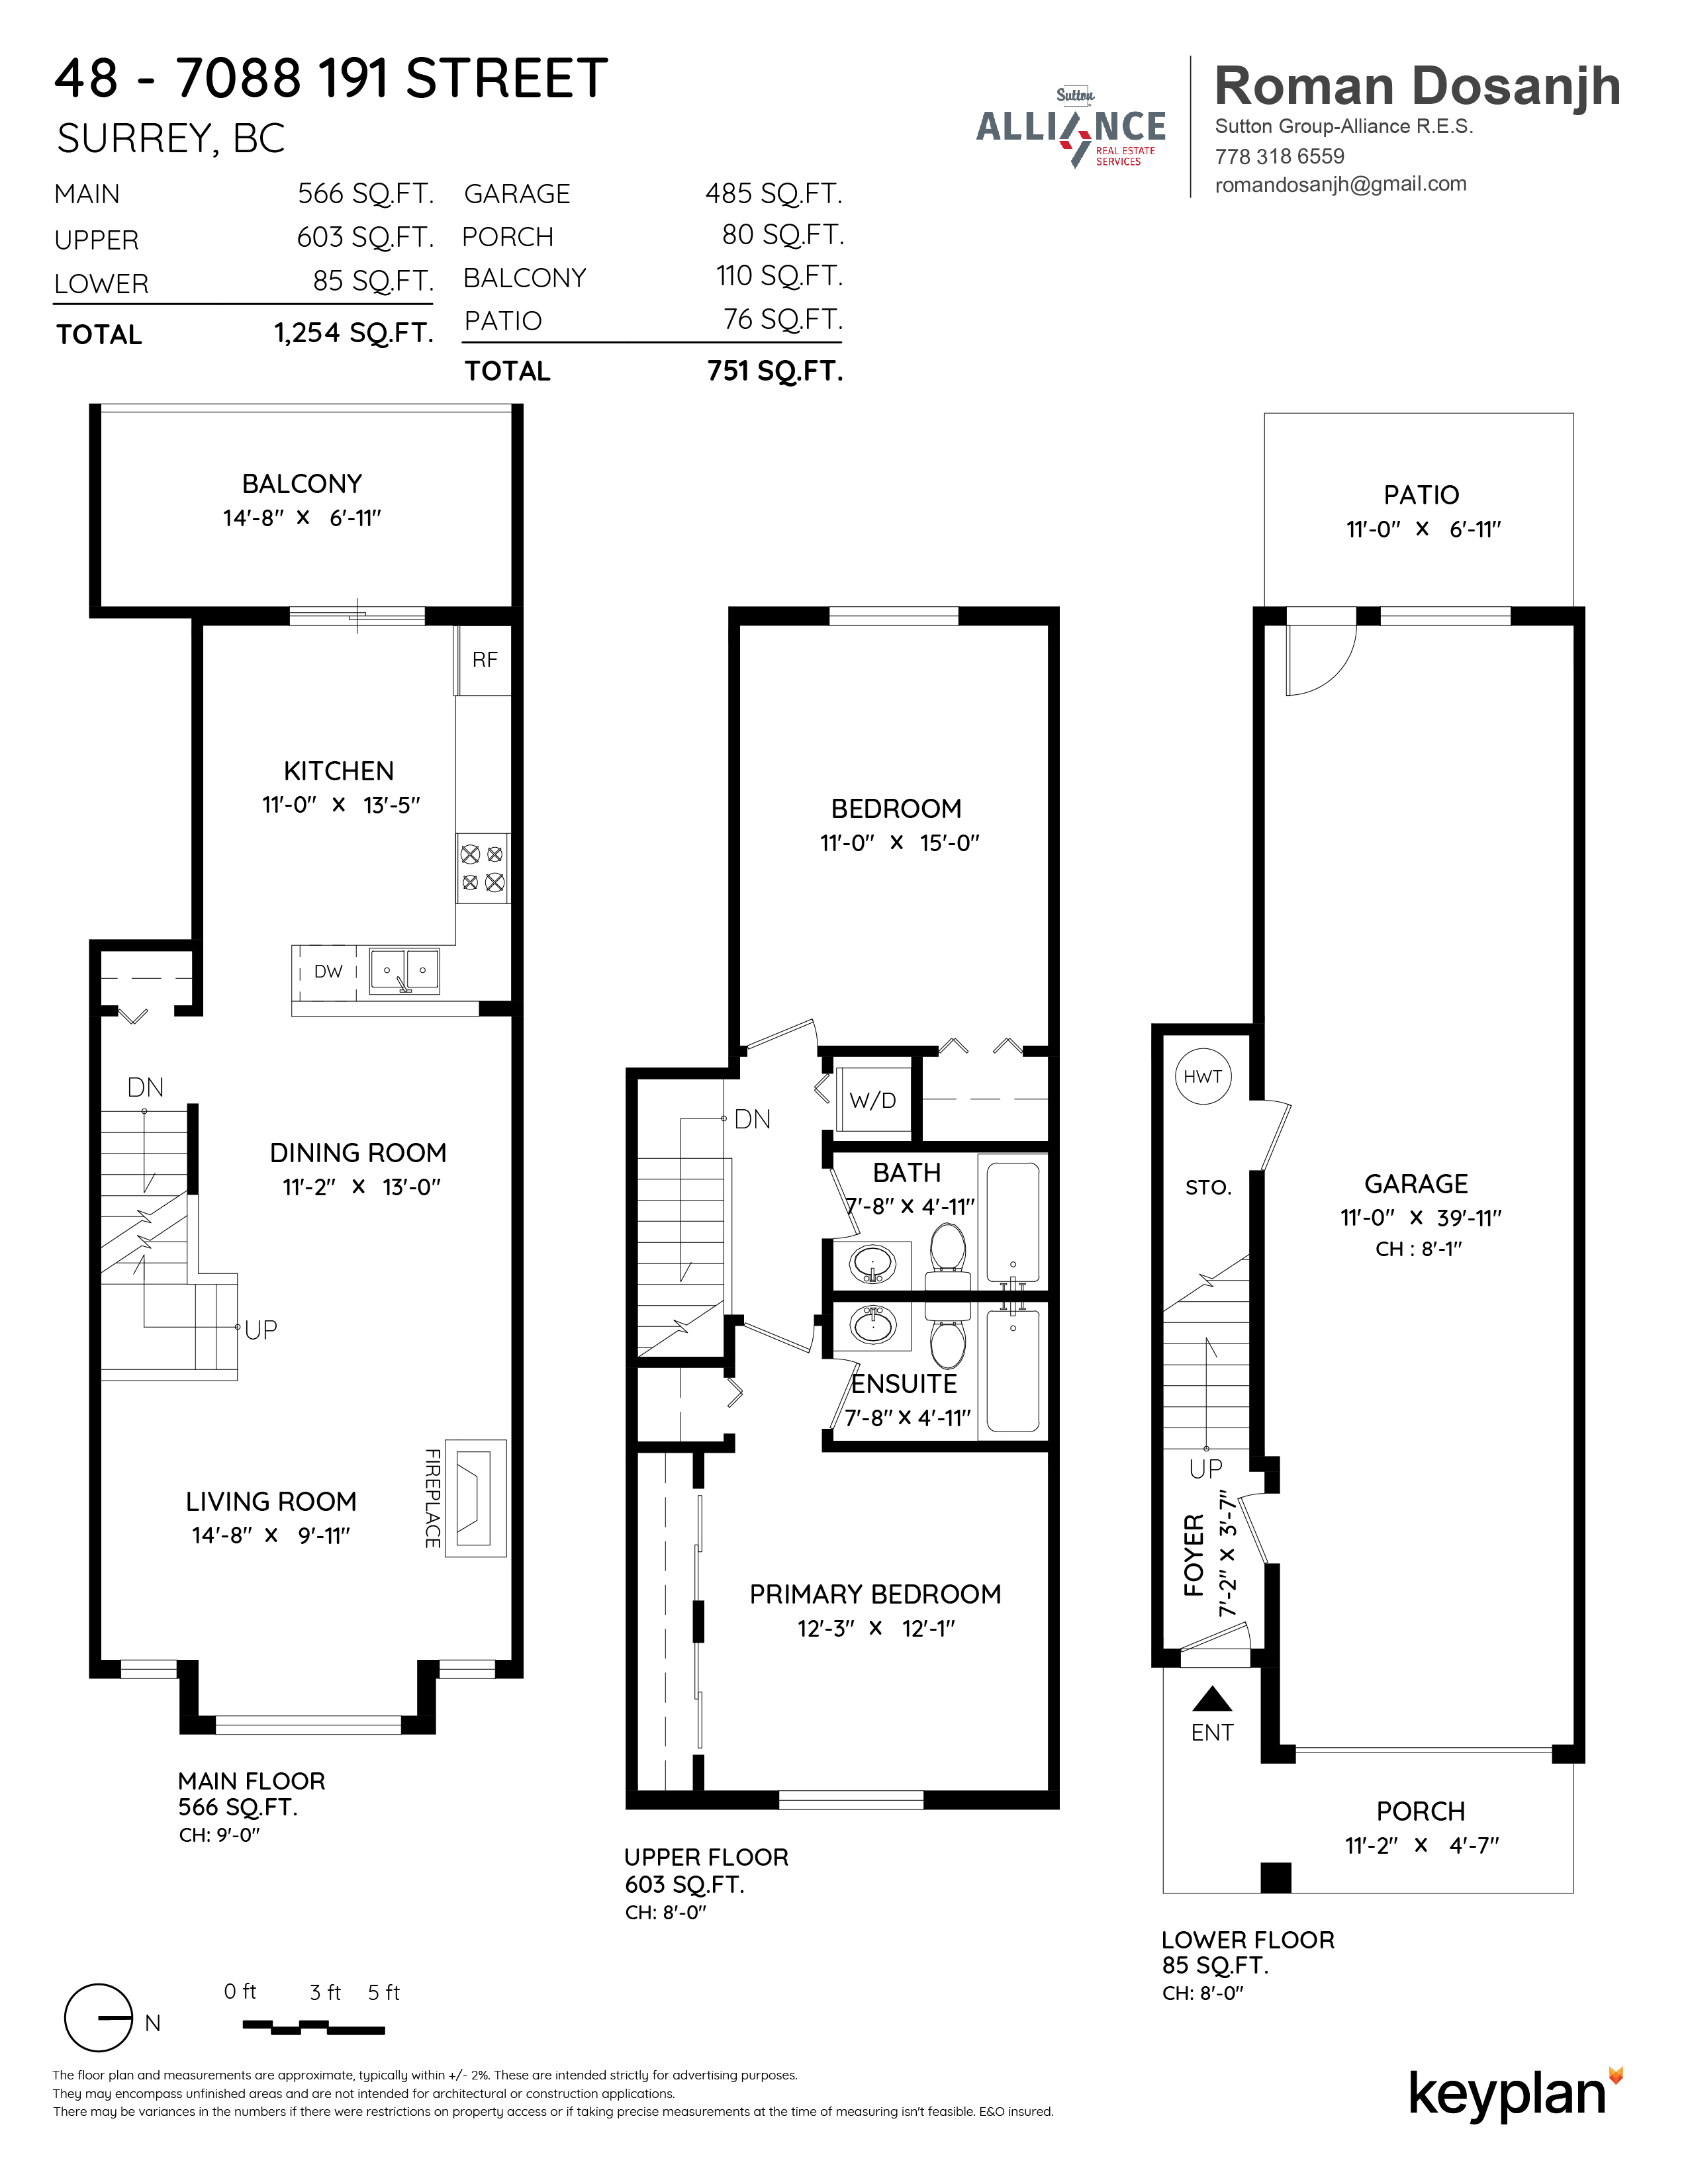 Roman Dosanjh - Unit 48 - 7088 191 Street, Surrey, BC, Canada | Floor Plan 1